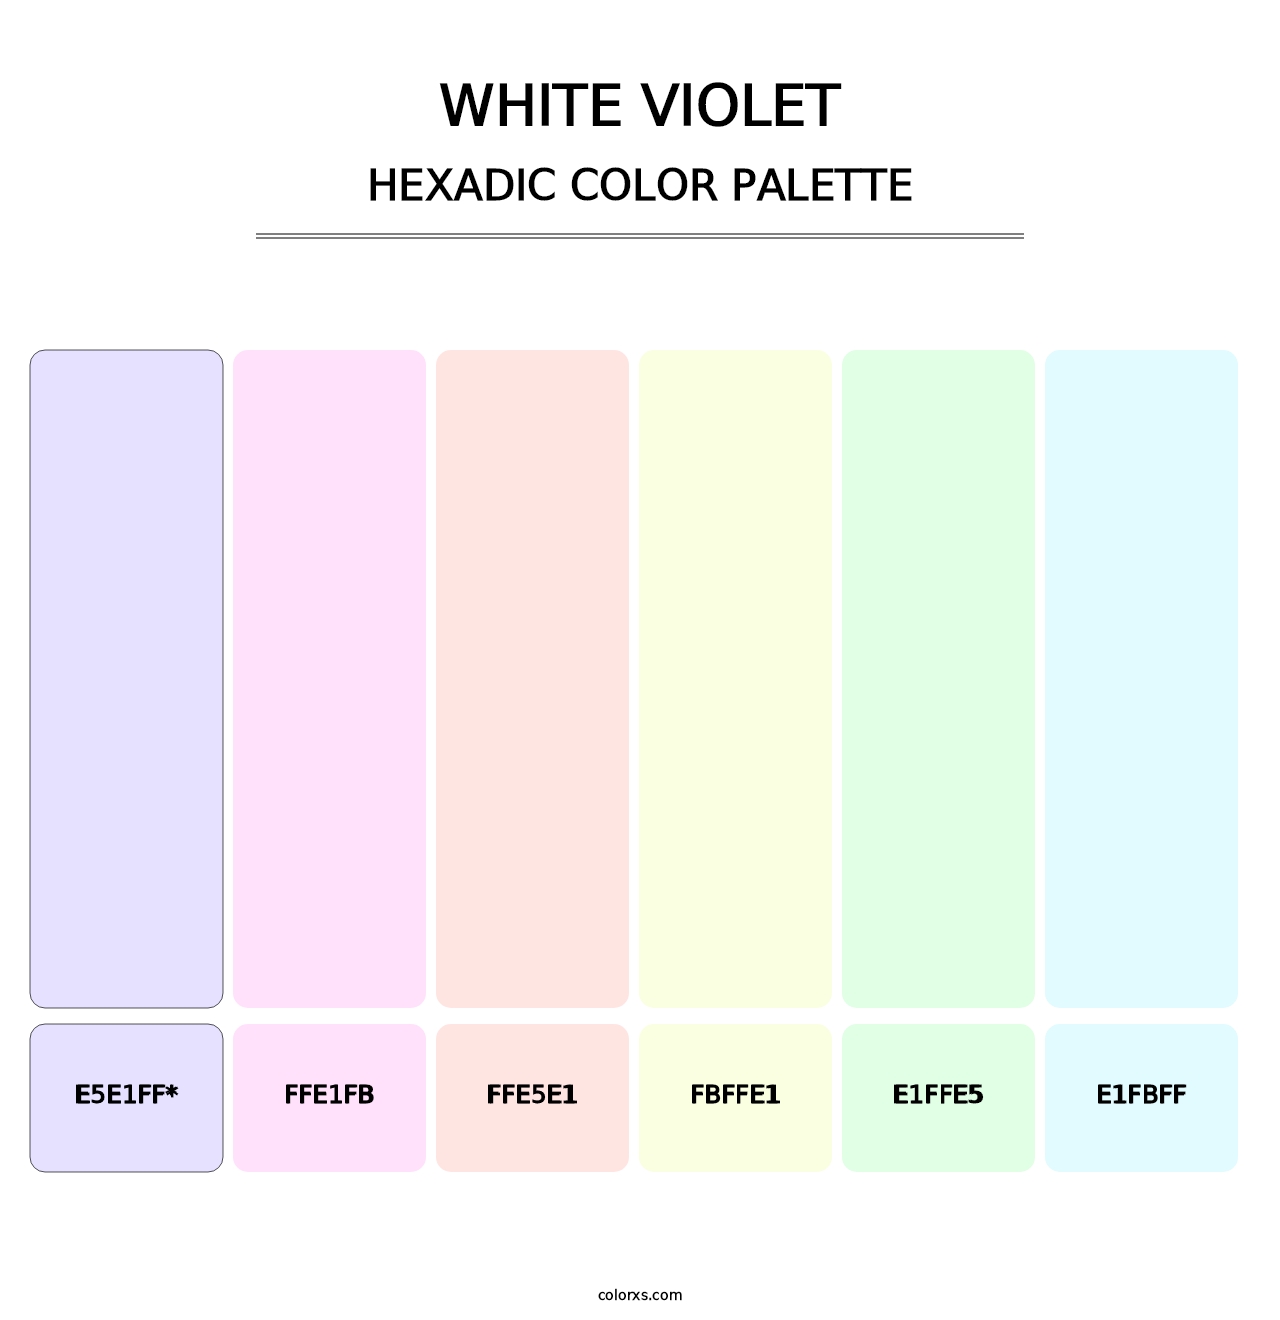 White Violet - Hexadic Color Palette